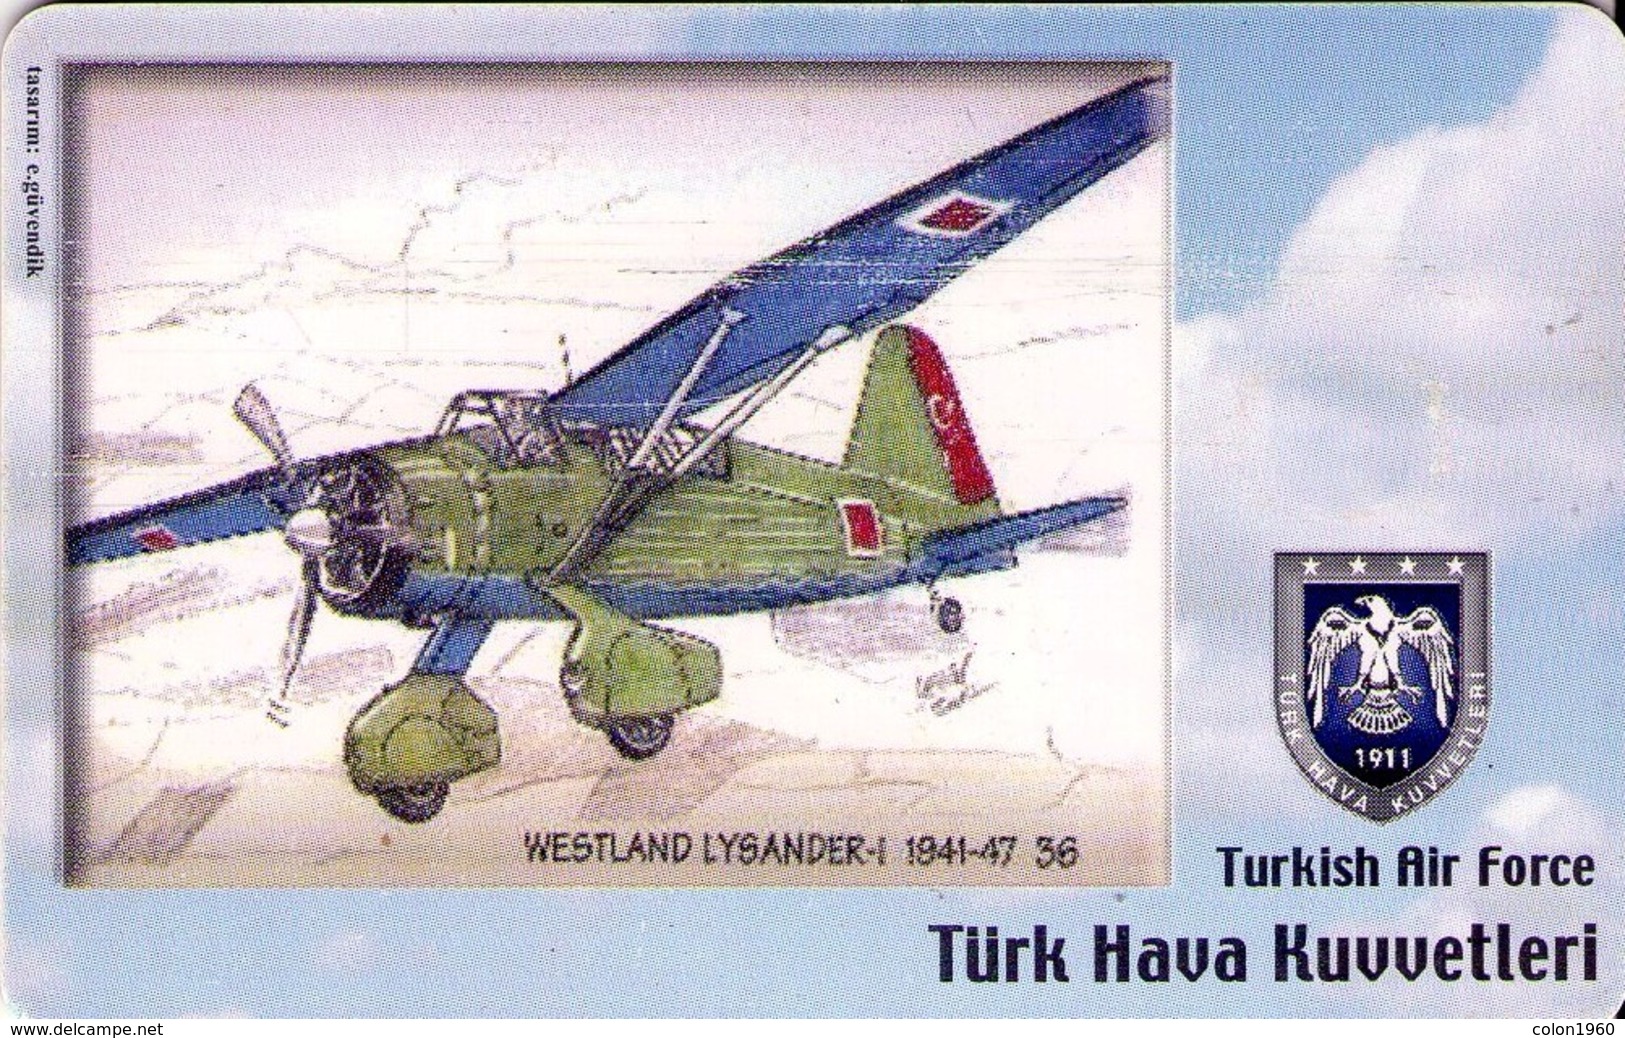 TARJETA TELEFONICA DE TURQUIA, AVIONES. (CHIP) TURKISH AIR FORCE, WESTLAND LYSANDER-I 1941-47, TR-TT-C-0138 (116) - Aviones